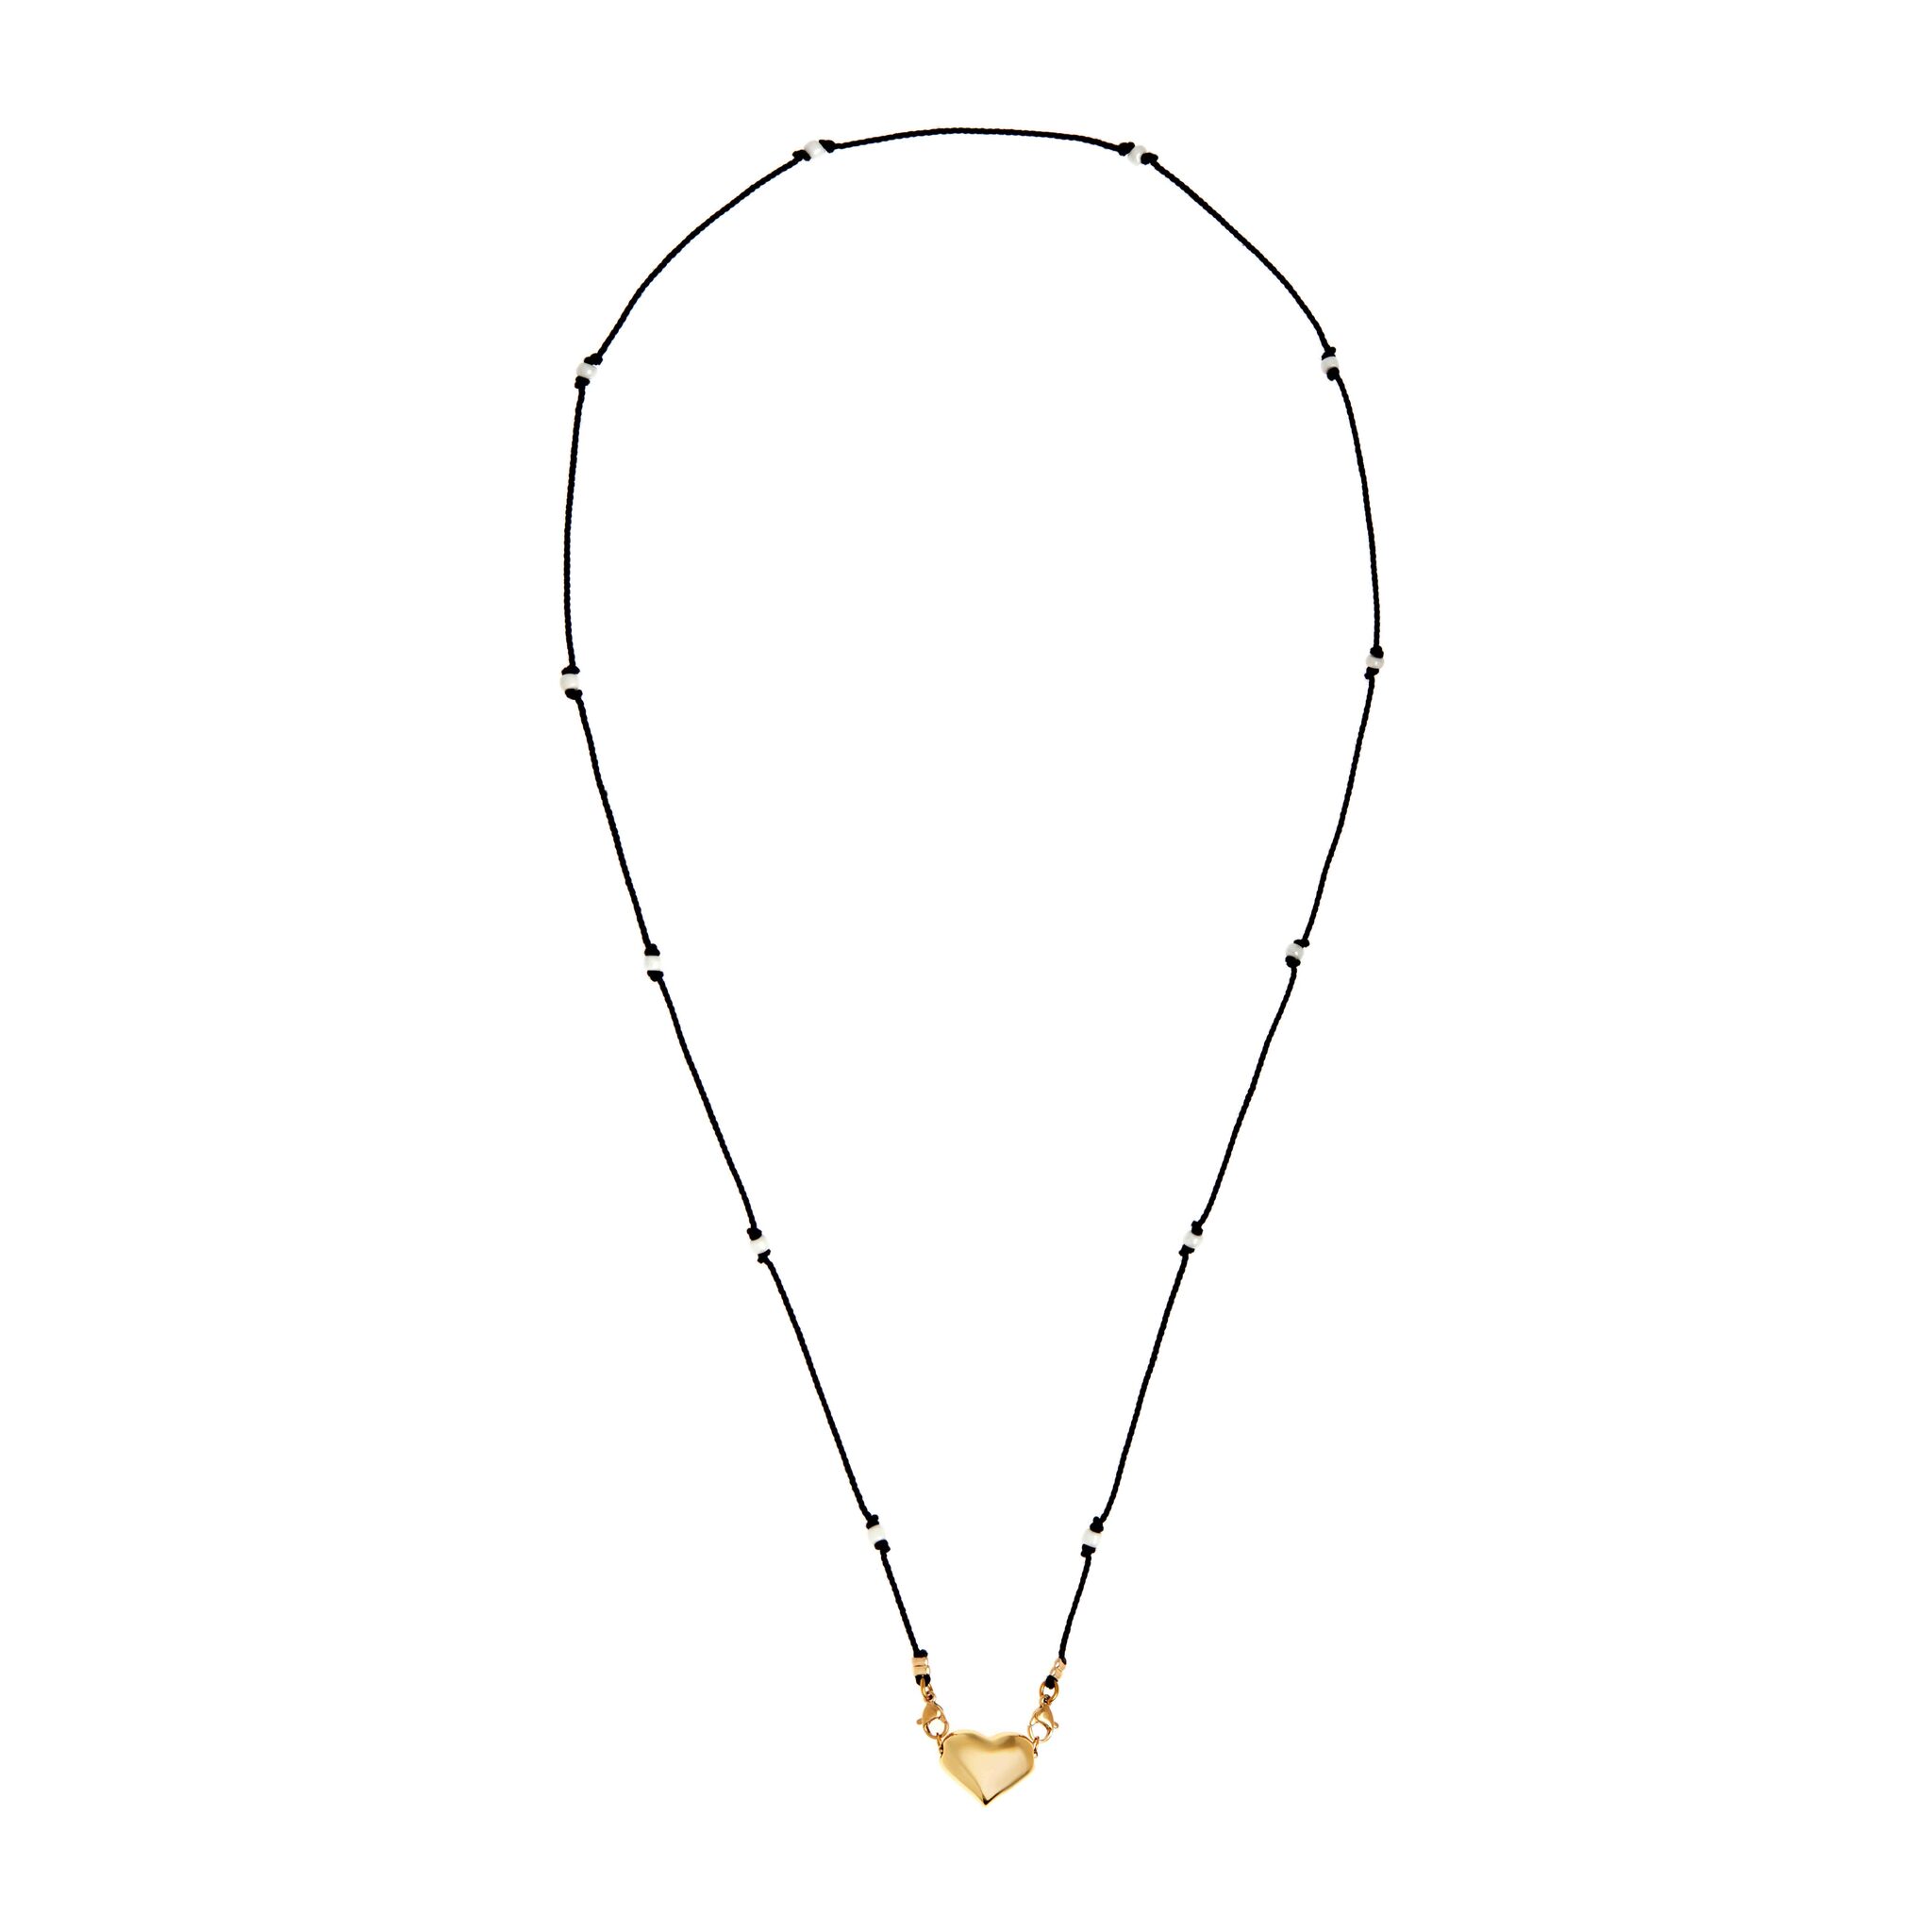 viva la vika колье gold heart necklace – green VIVA LA VIKA Колье Knitted Heart Necklace – Gold